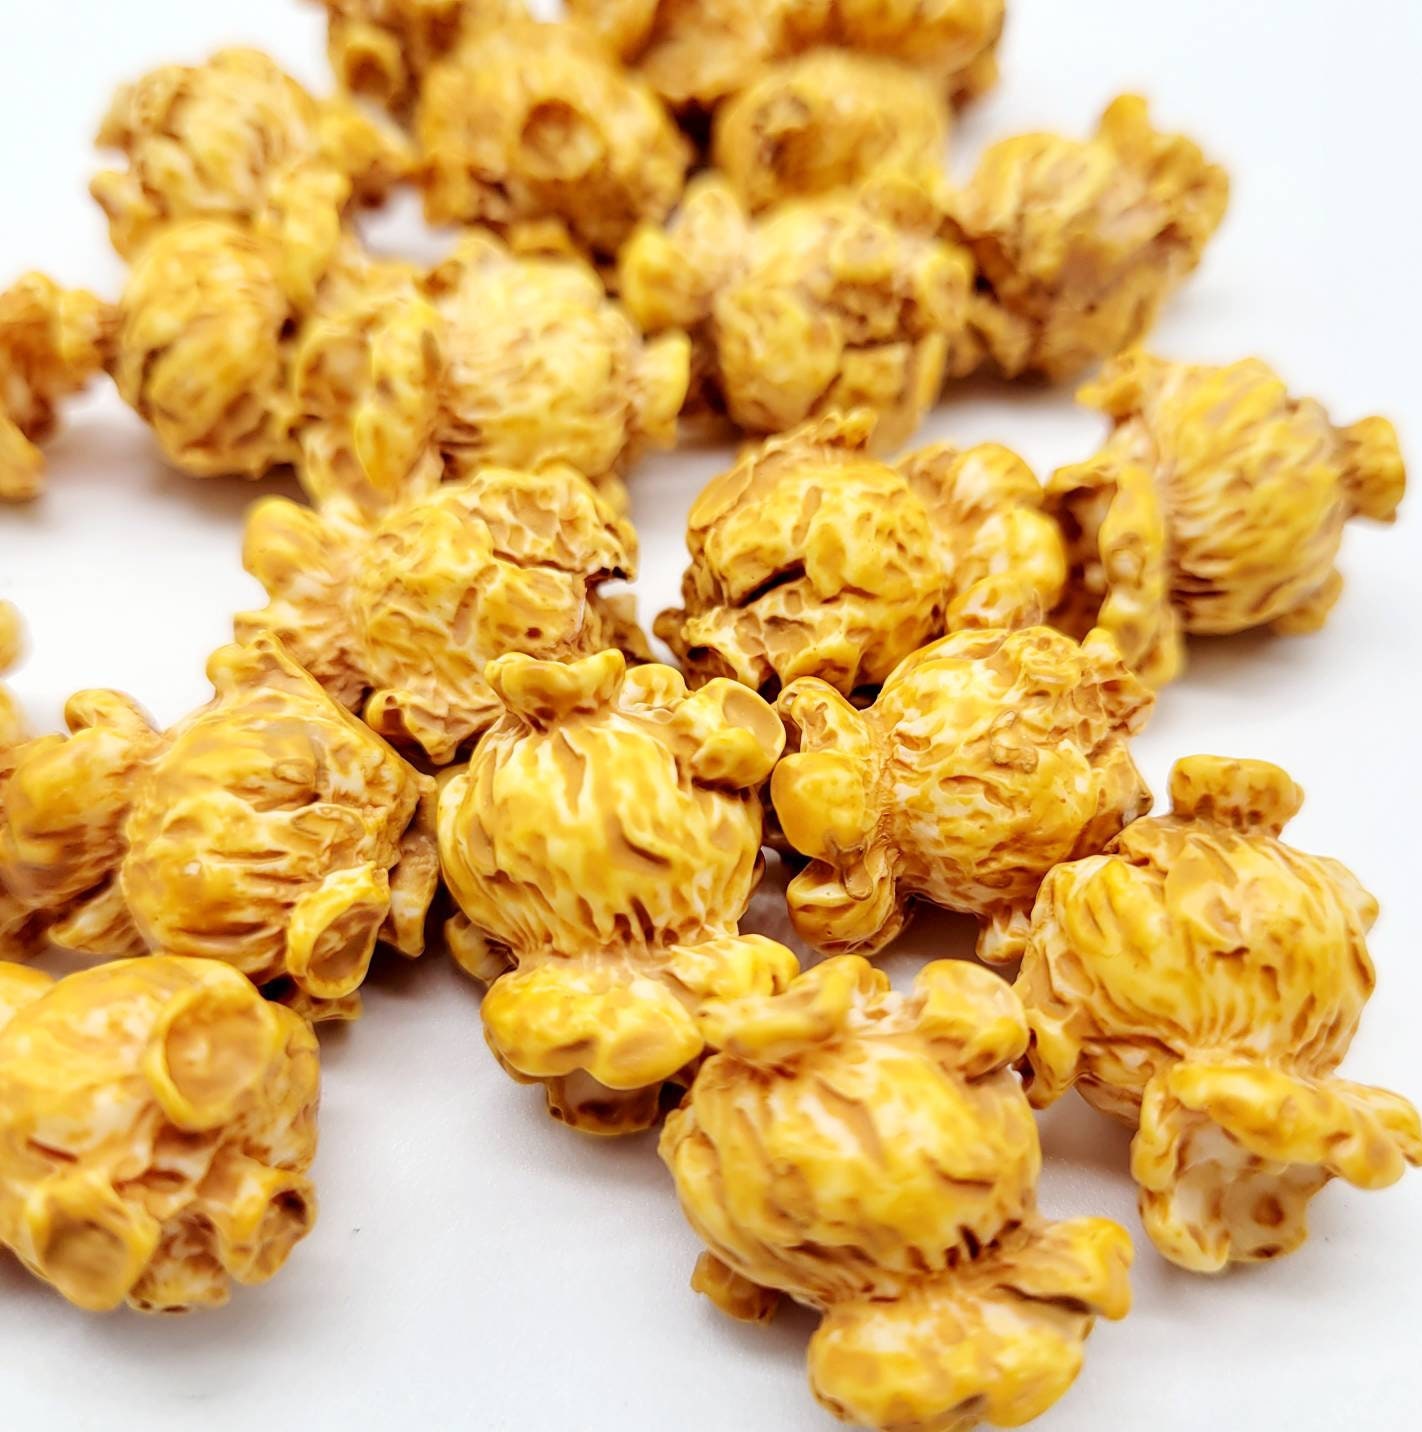 35pc Caramel Popcorn Shape Silicone Mold Realistic Food Shape for